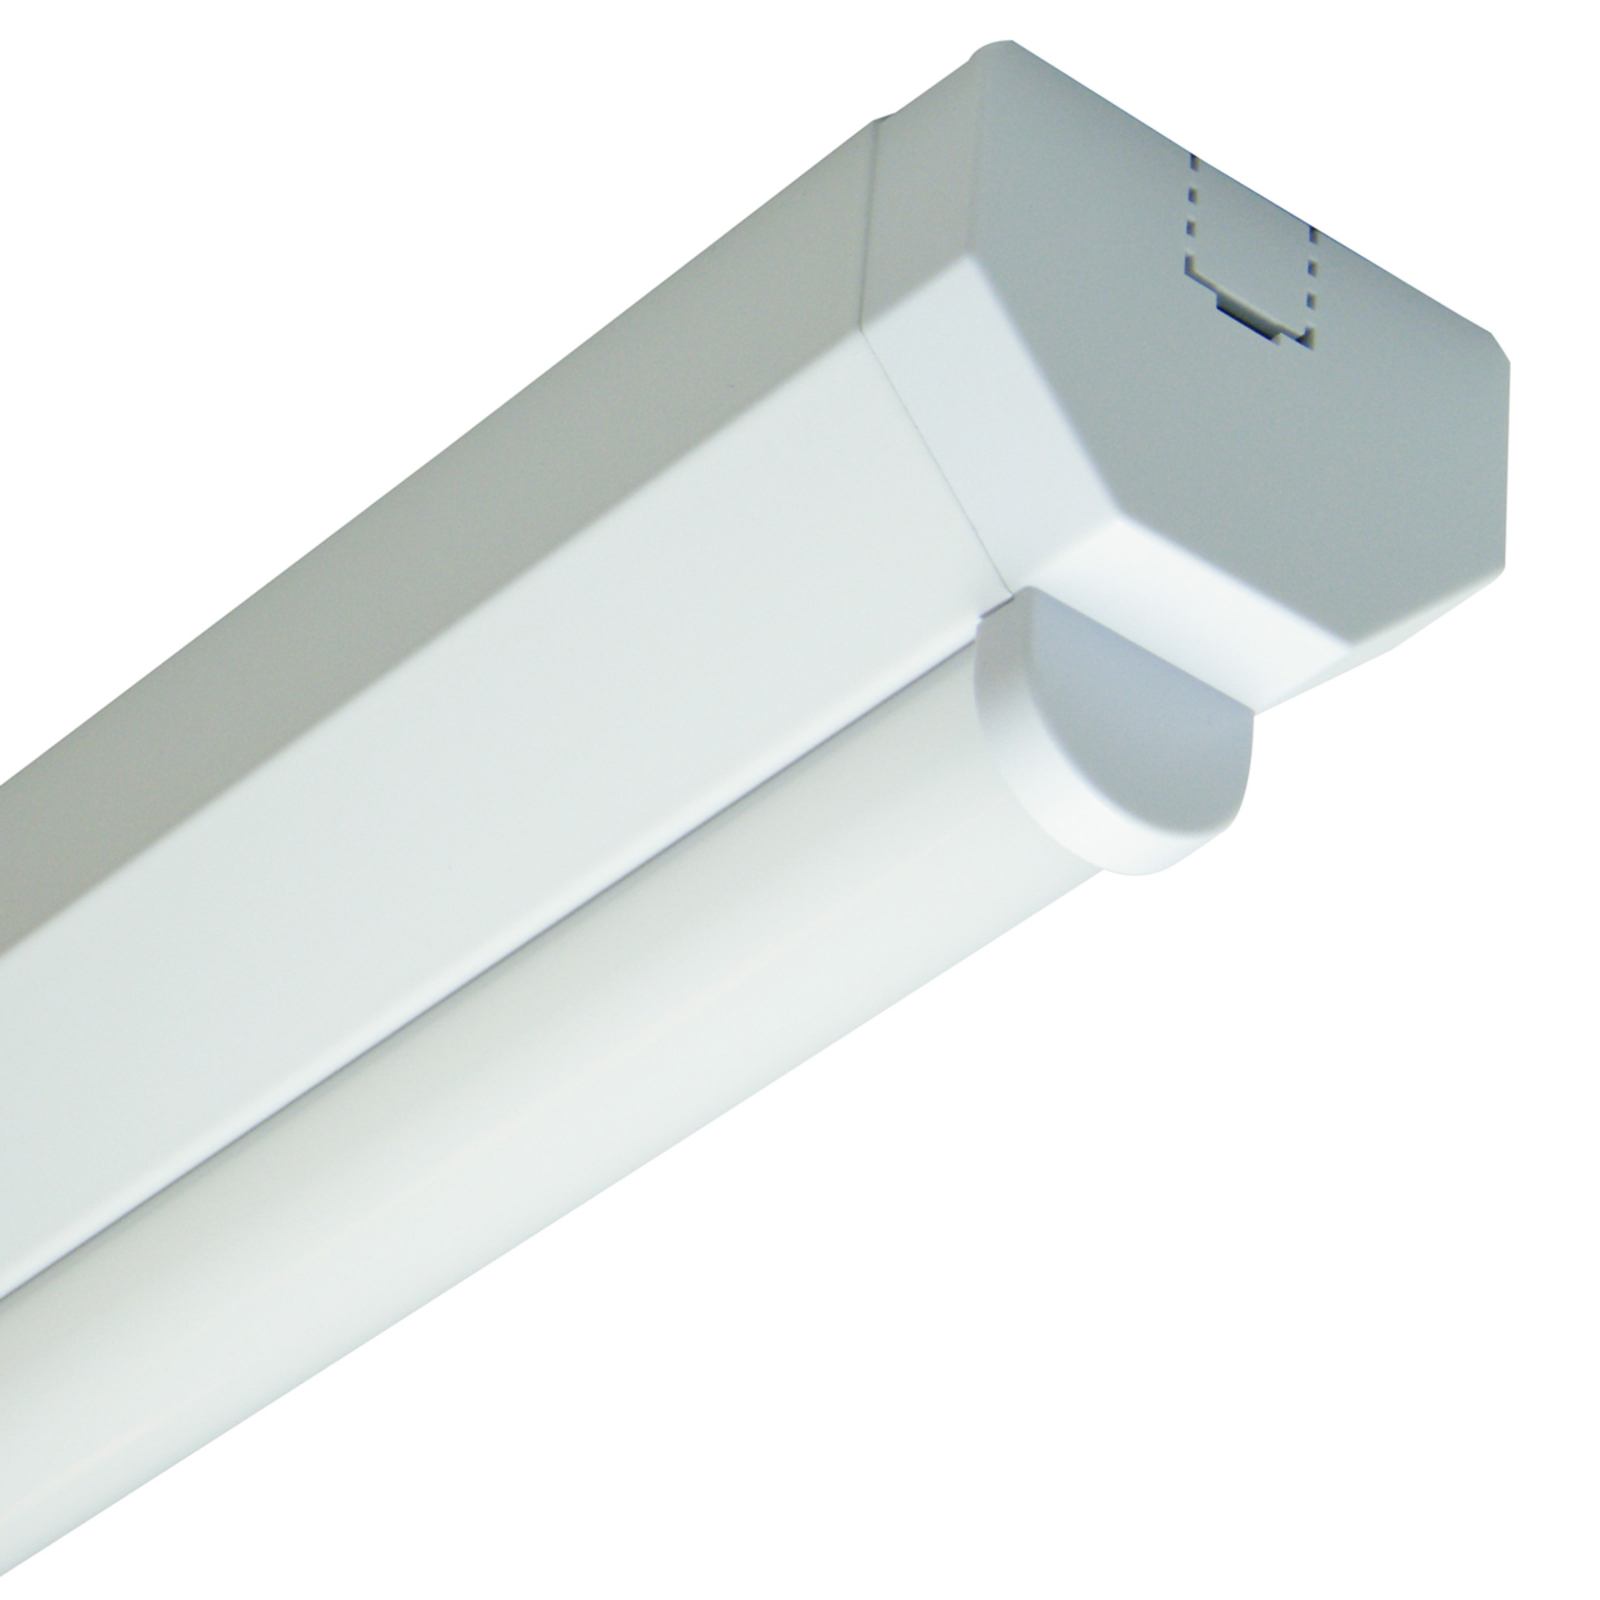 Plafonnier universel LED Basic 1 - 150 cm